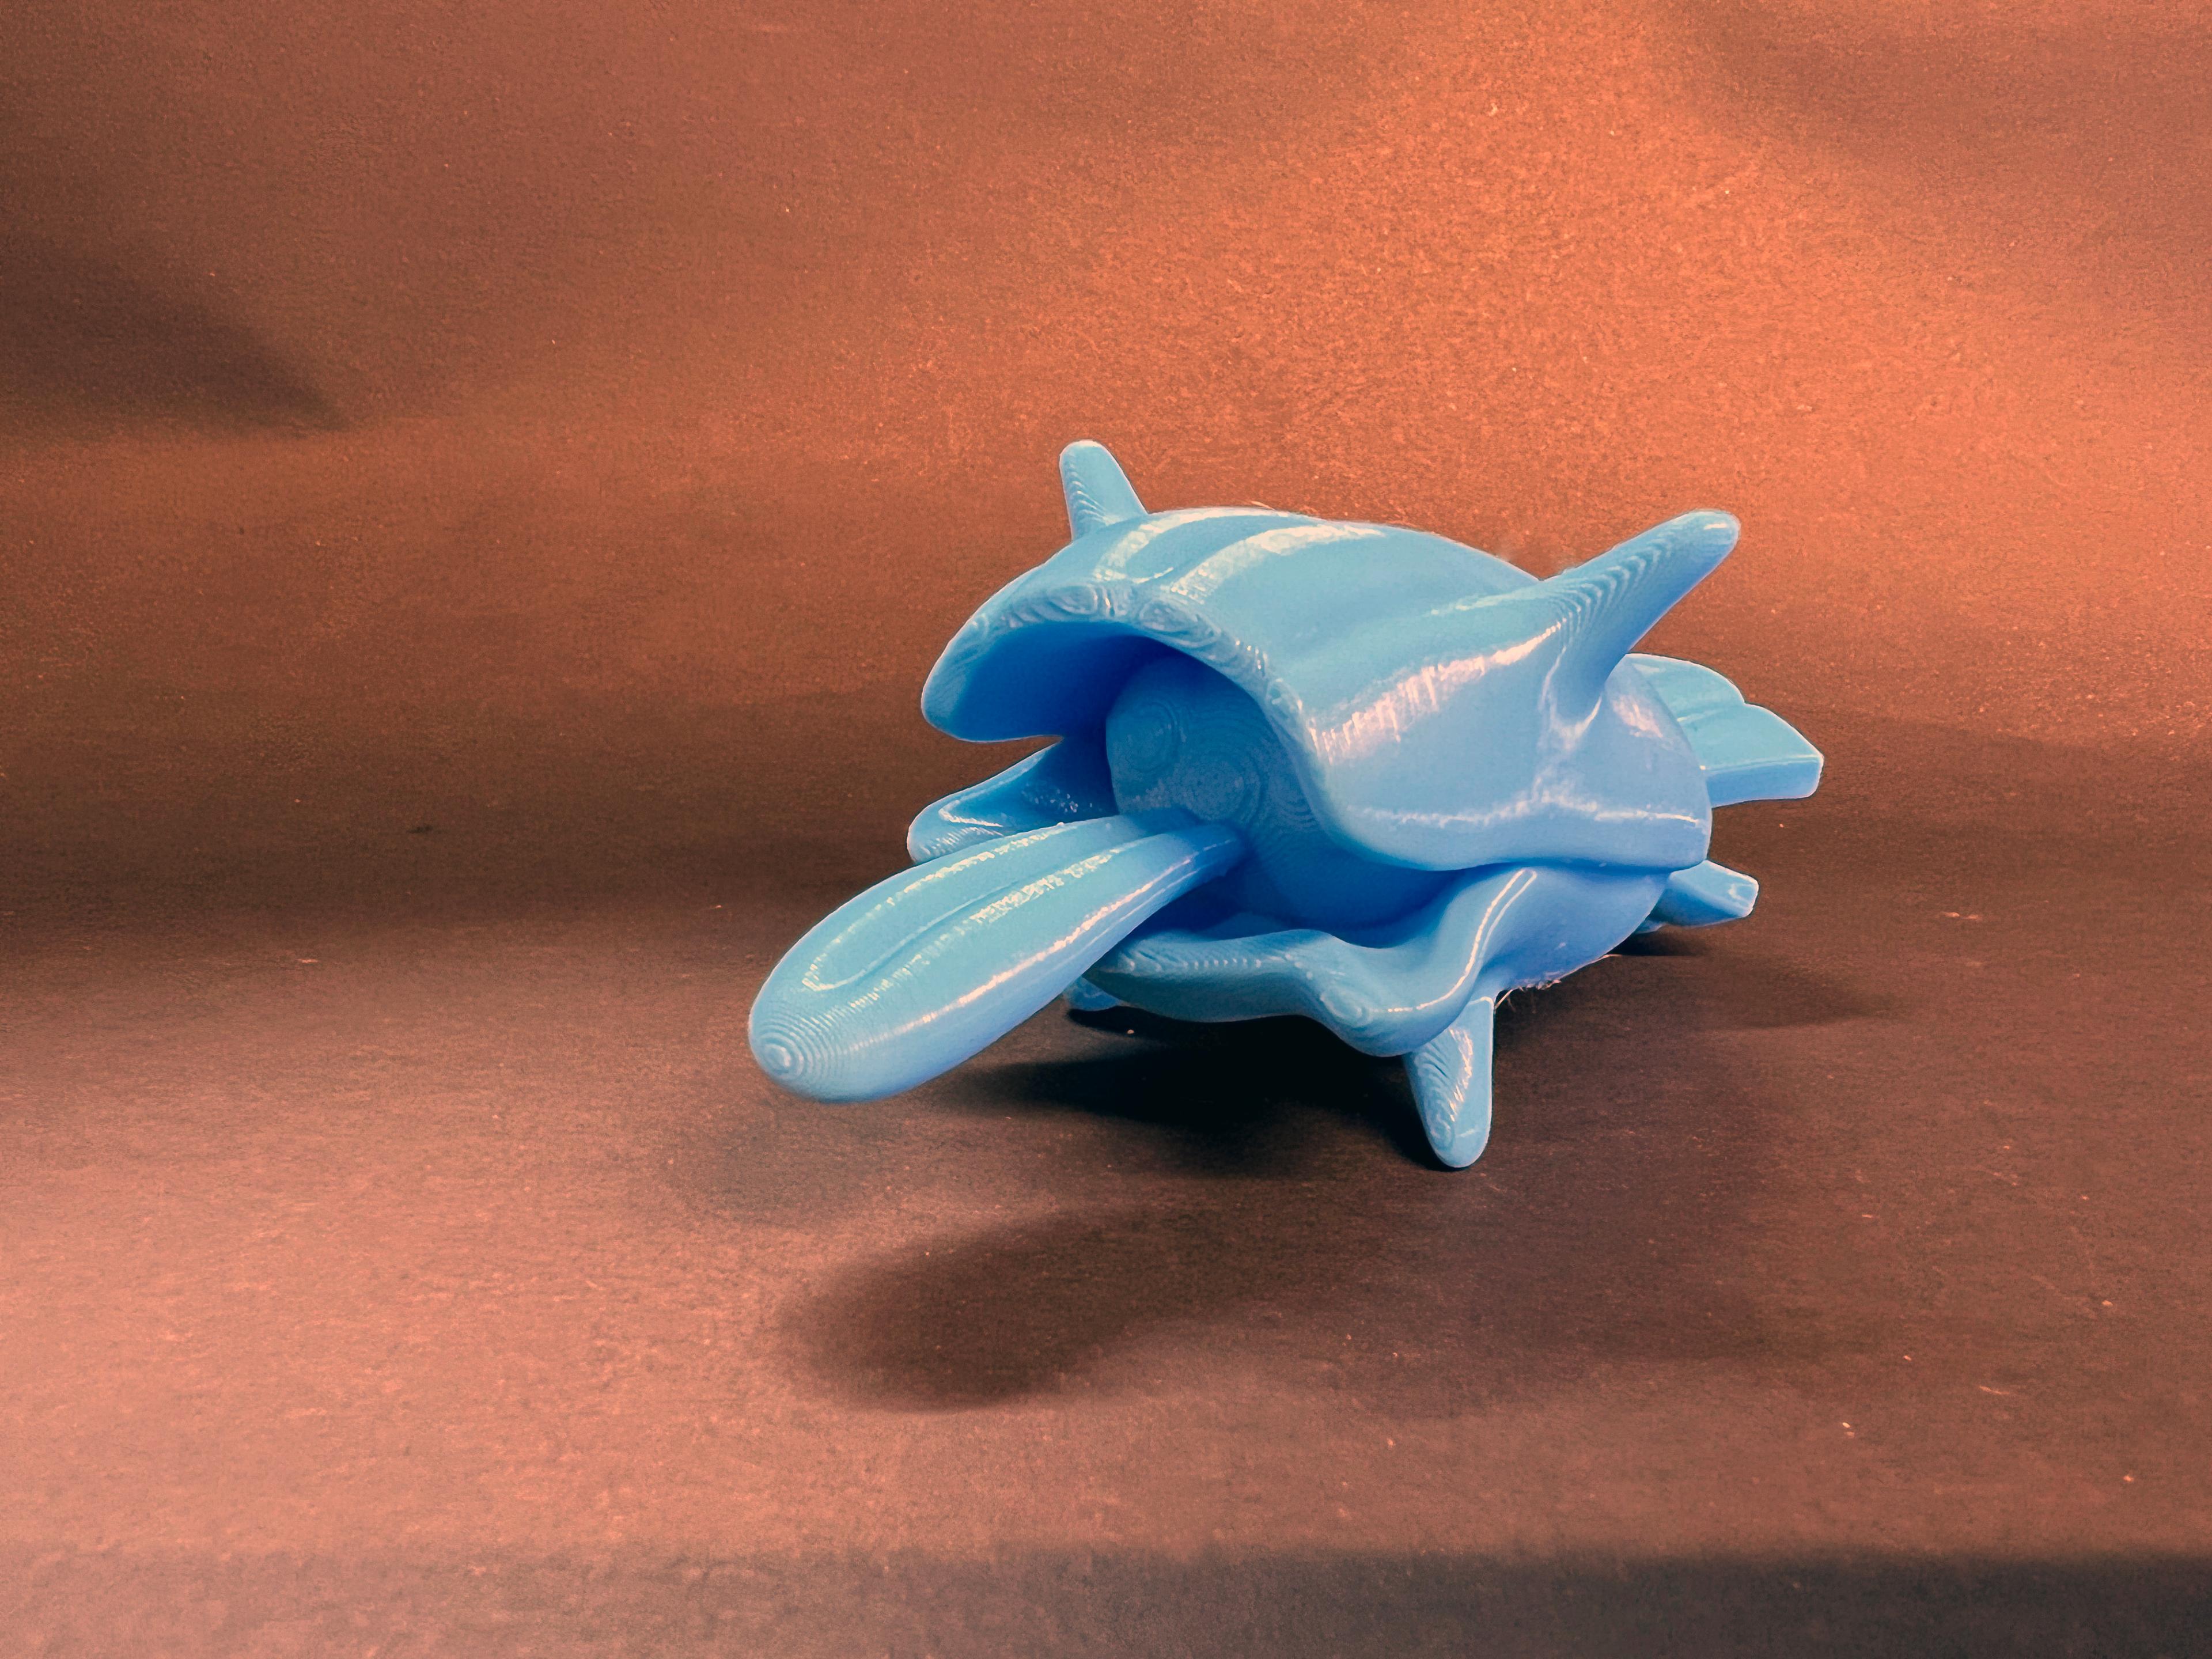 Pokemon - Shellder with 2 poses 3D model 3D printable